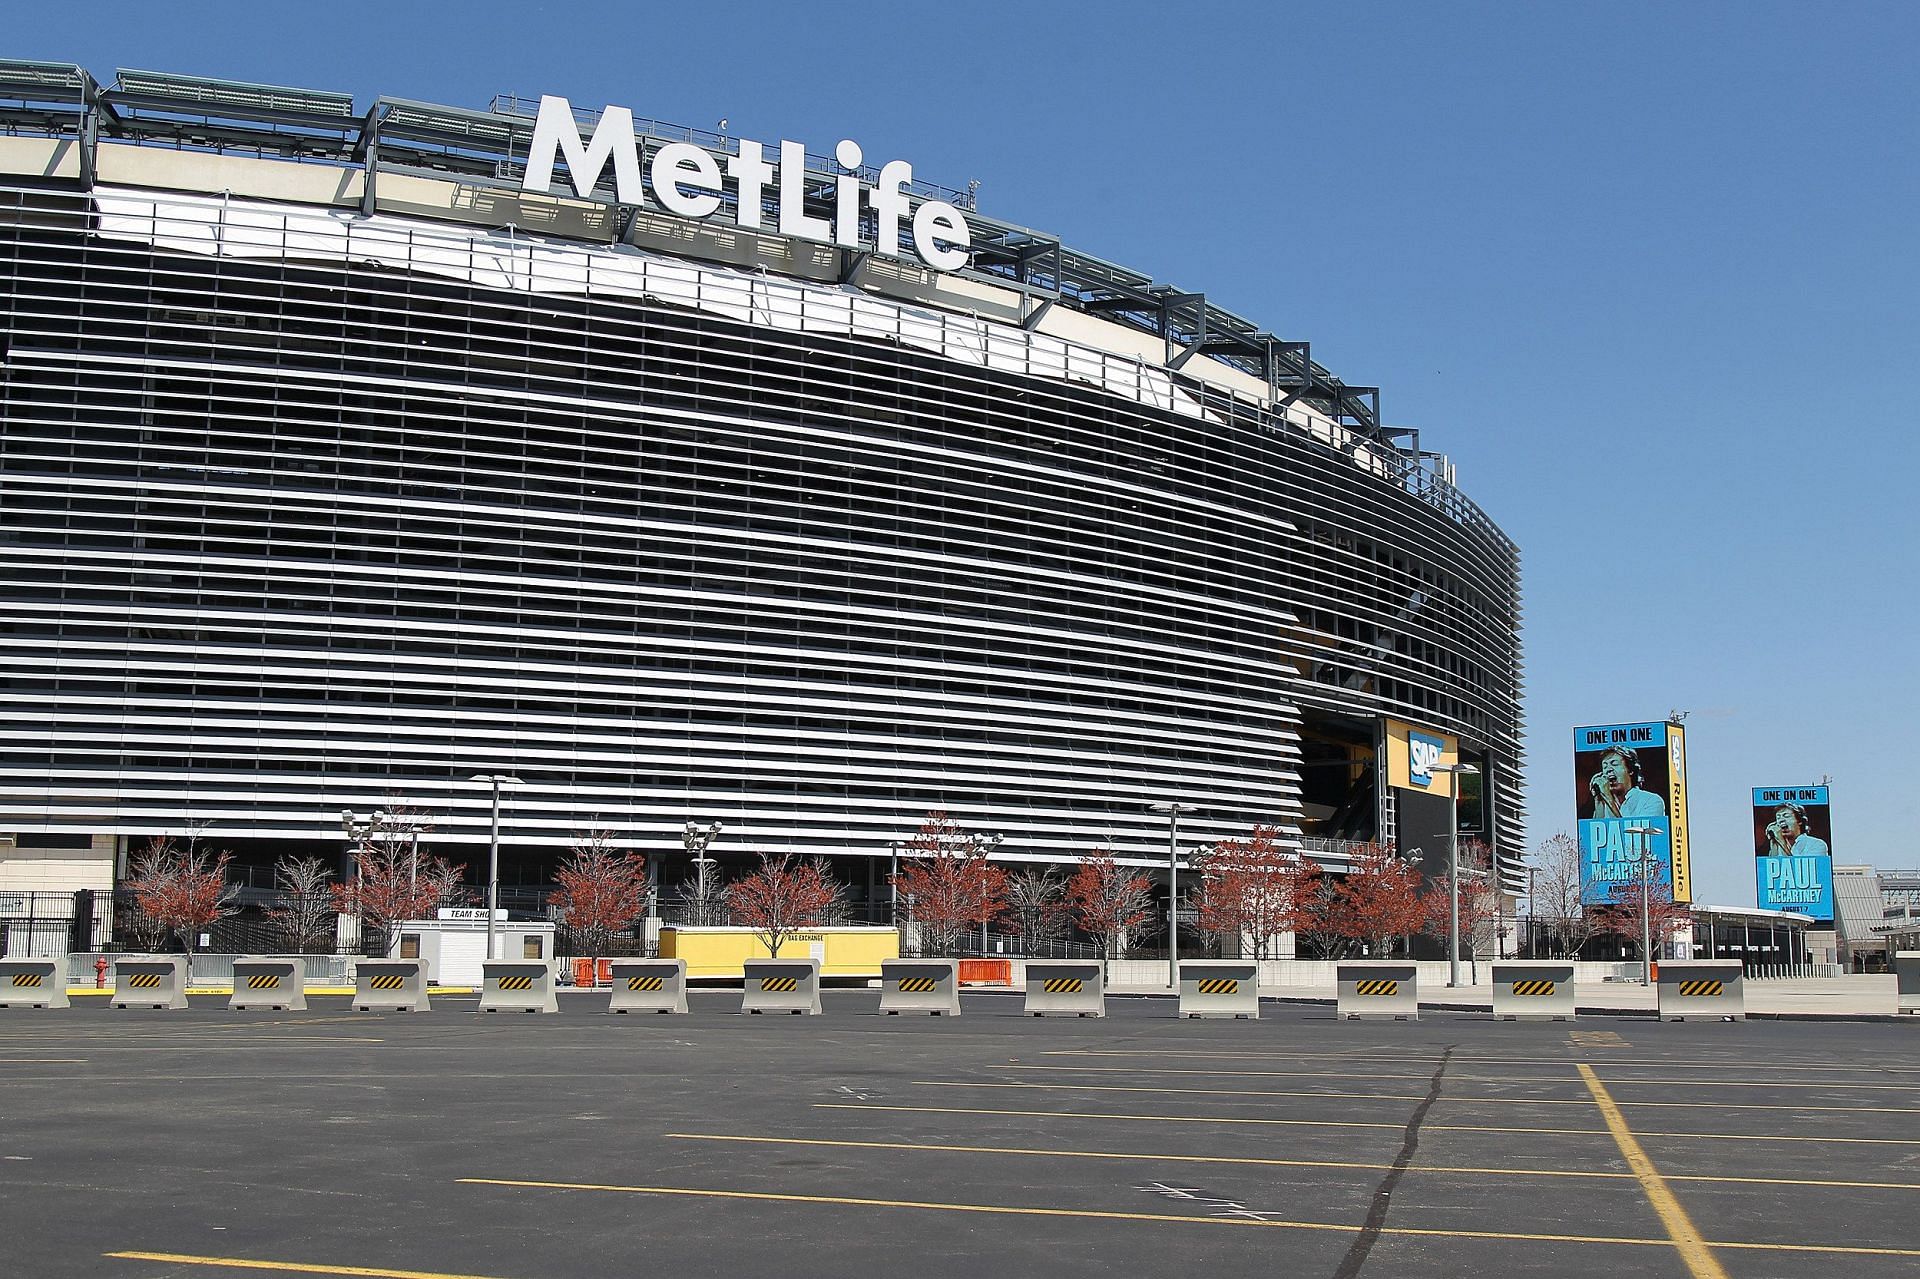 The MetLife Stadium in New York is the biggest NFL stadium